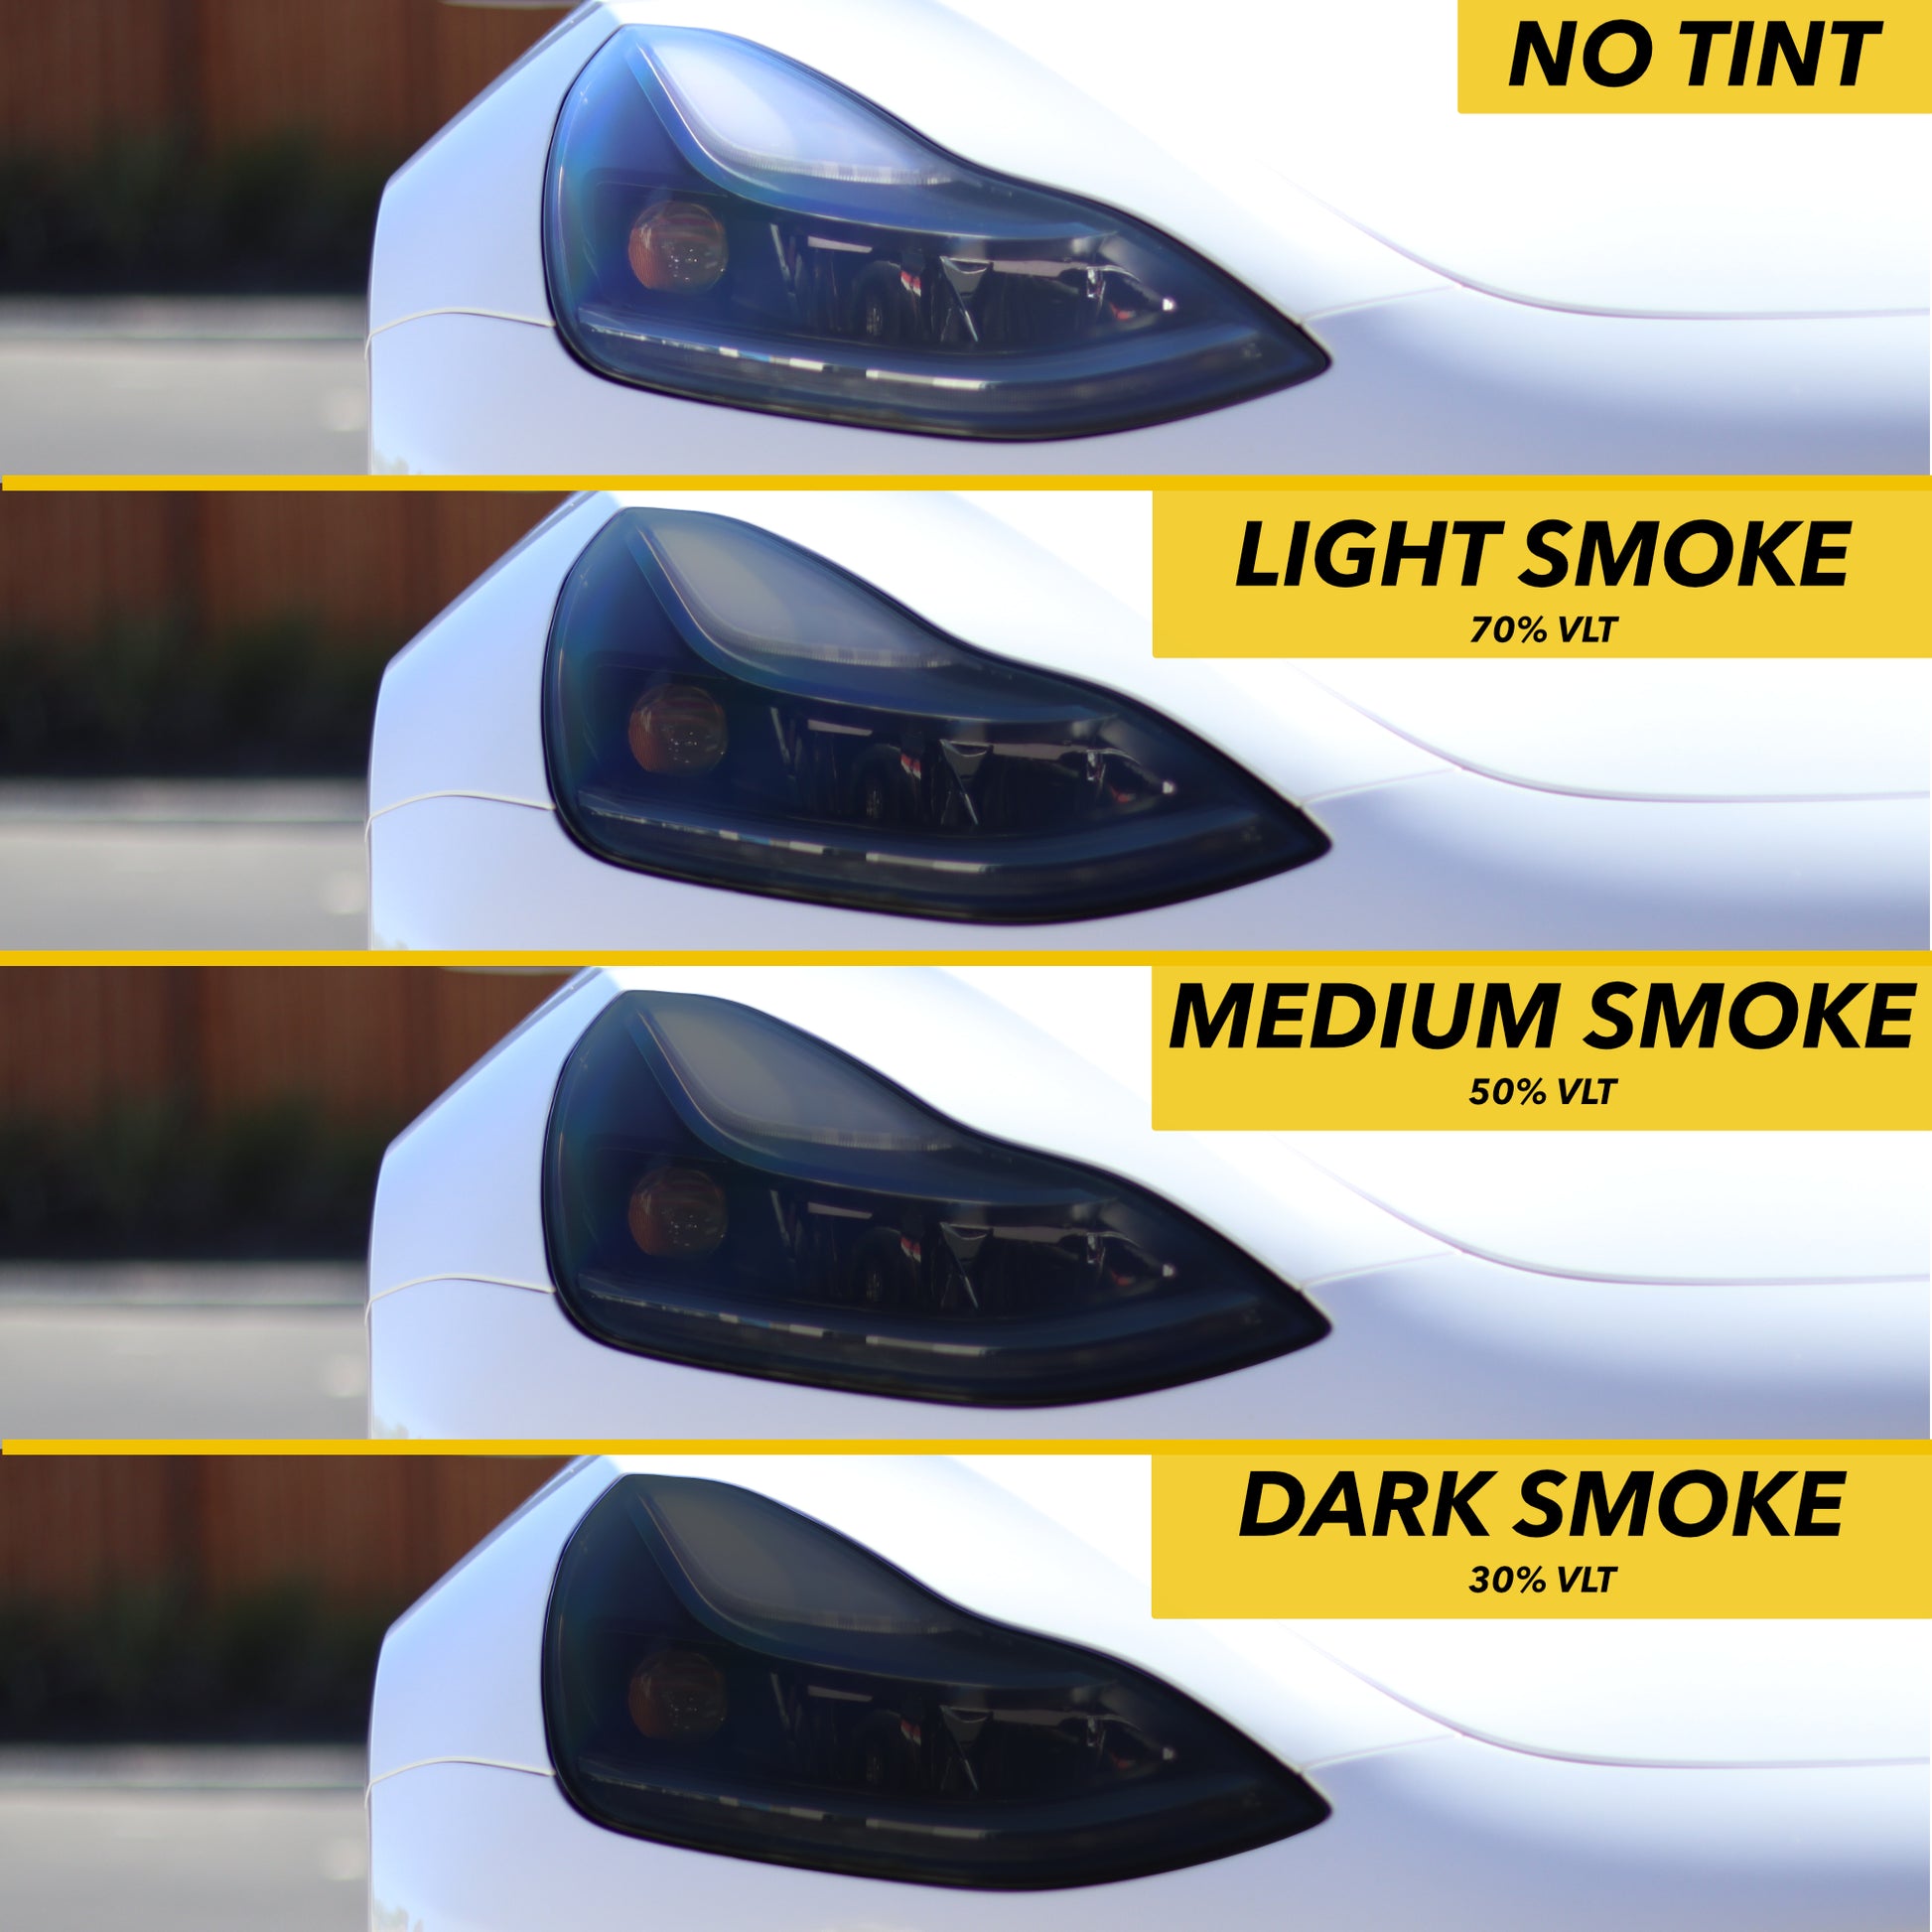 How to Tint Headlights